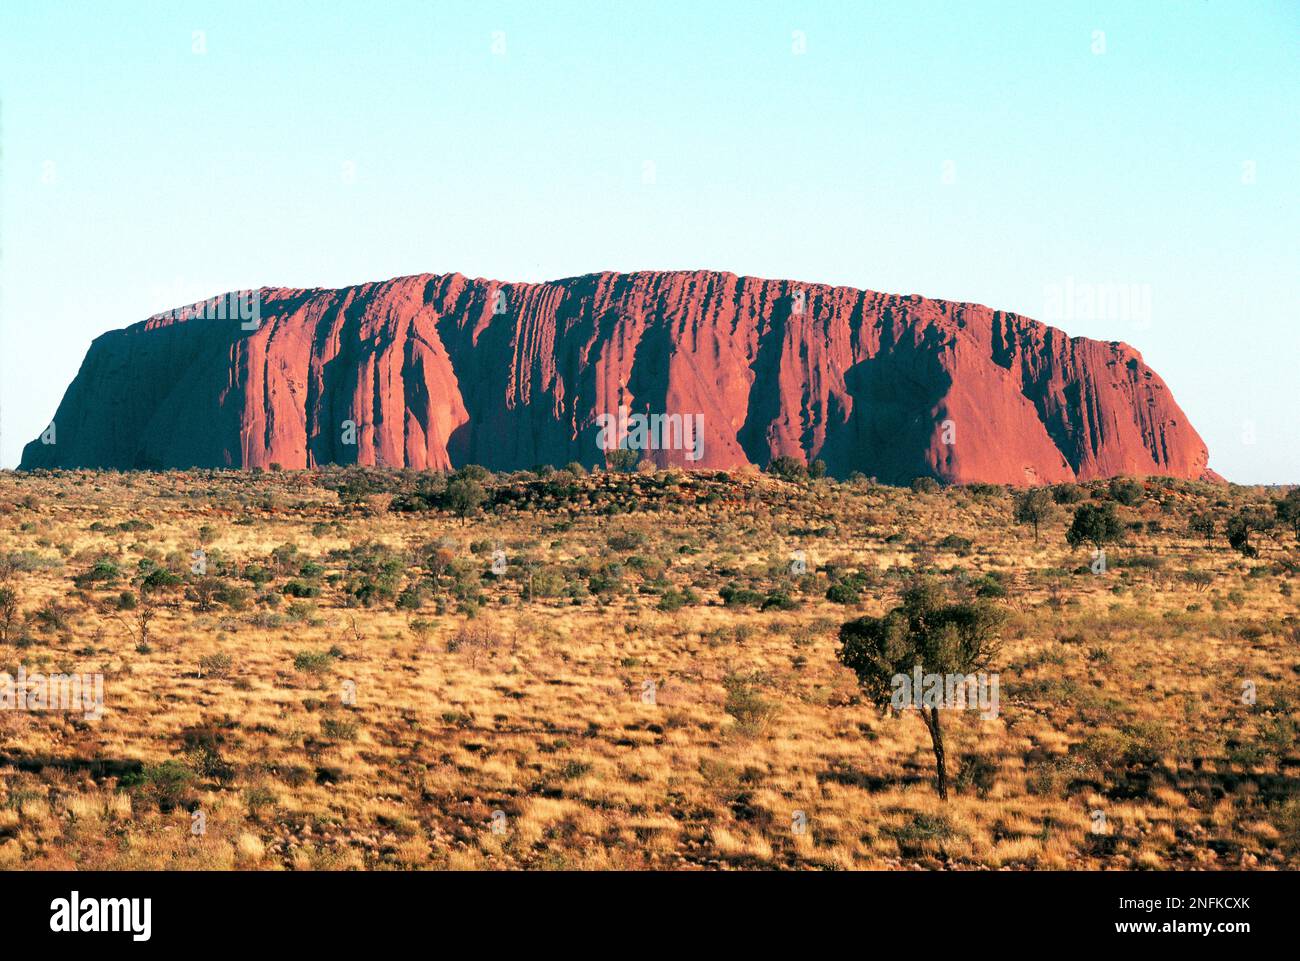 Australia. Northern Territory. Uluru (Ayers Rock). Stock Photo